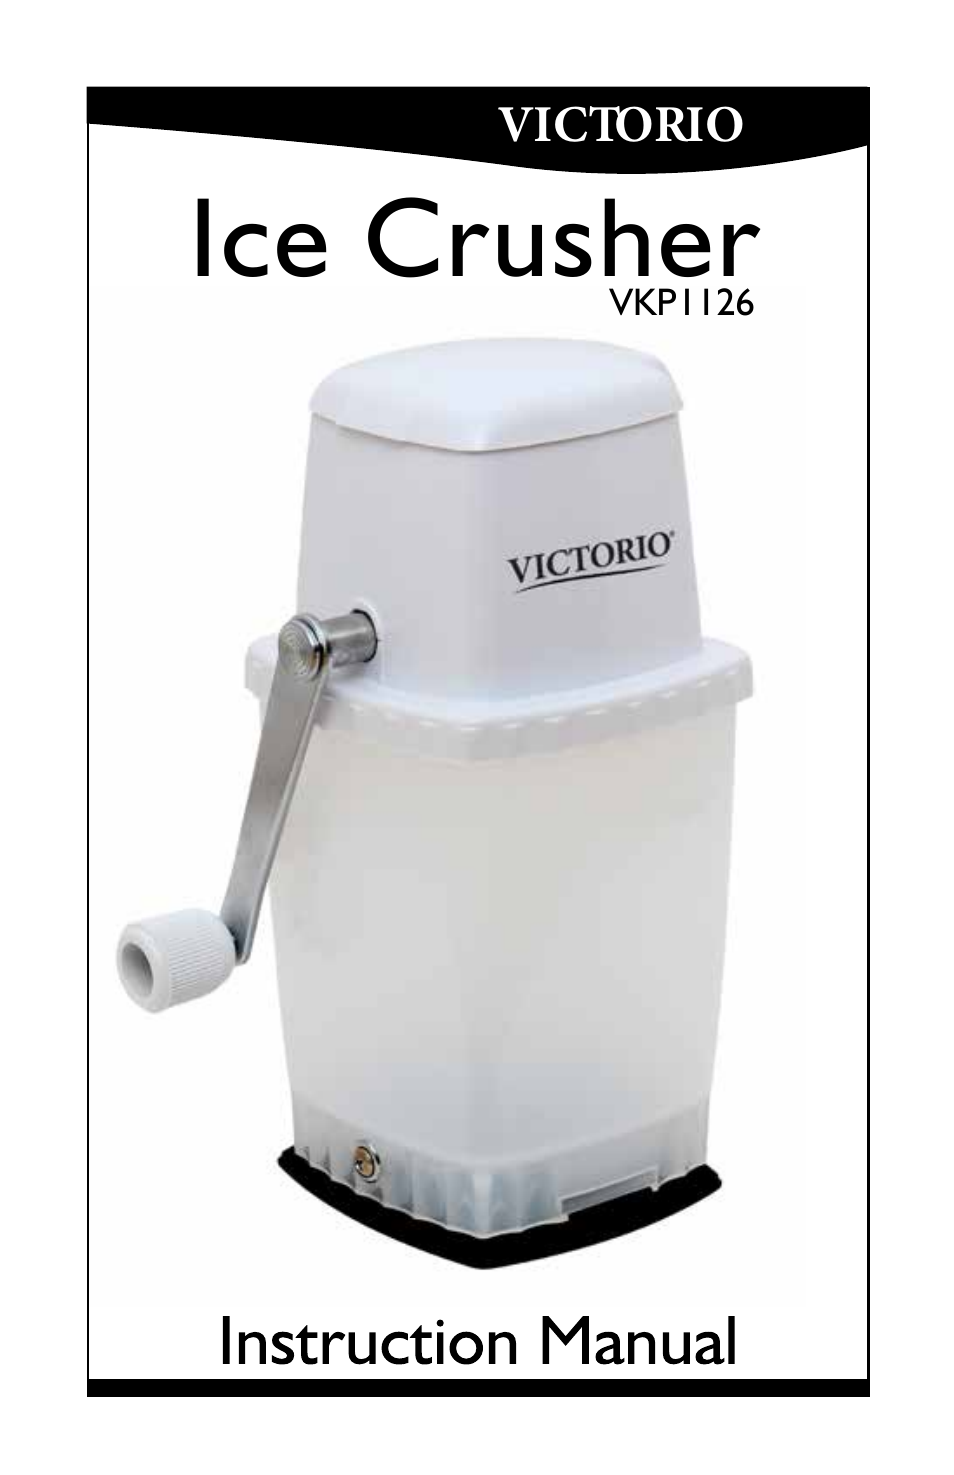 VKP1126 Ice Crusher